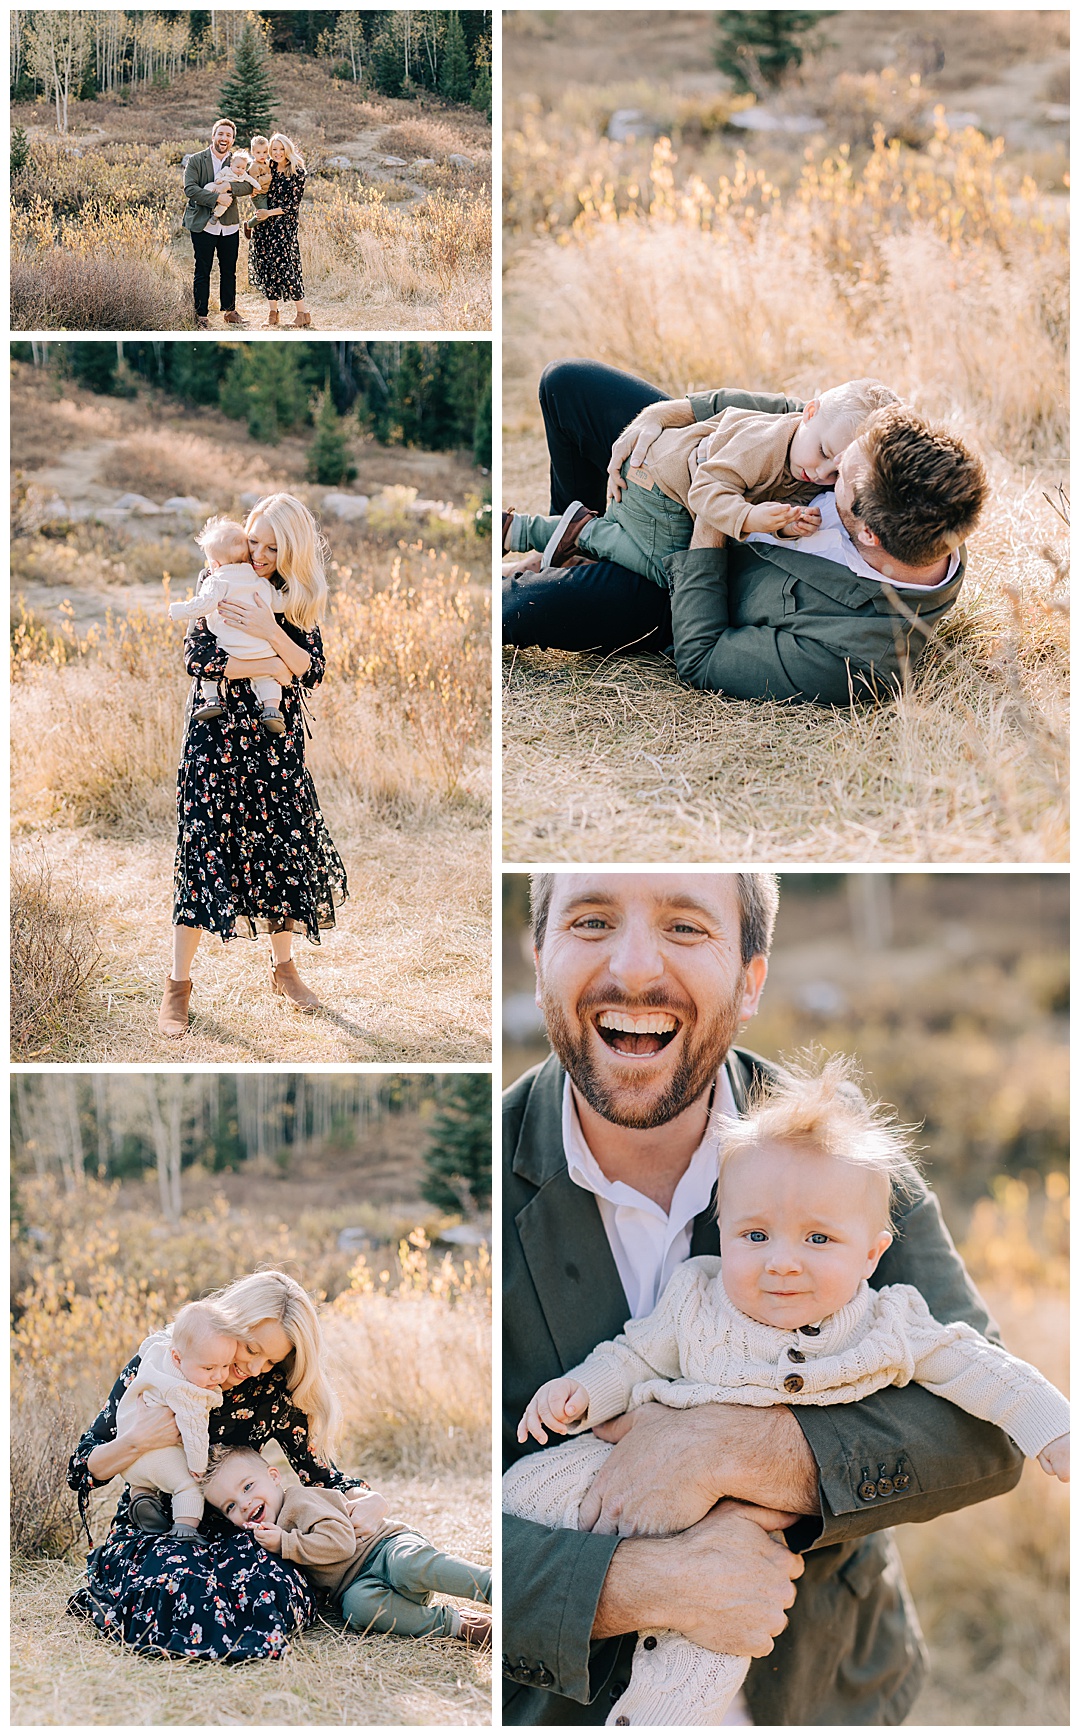 Jordan Pines Family Photographer | Drees Family